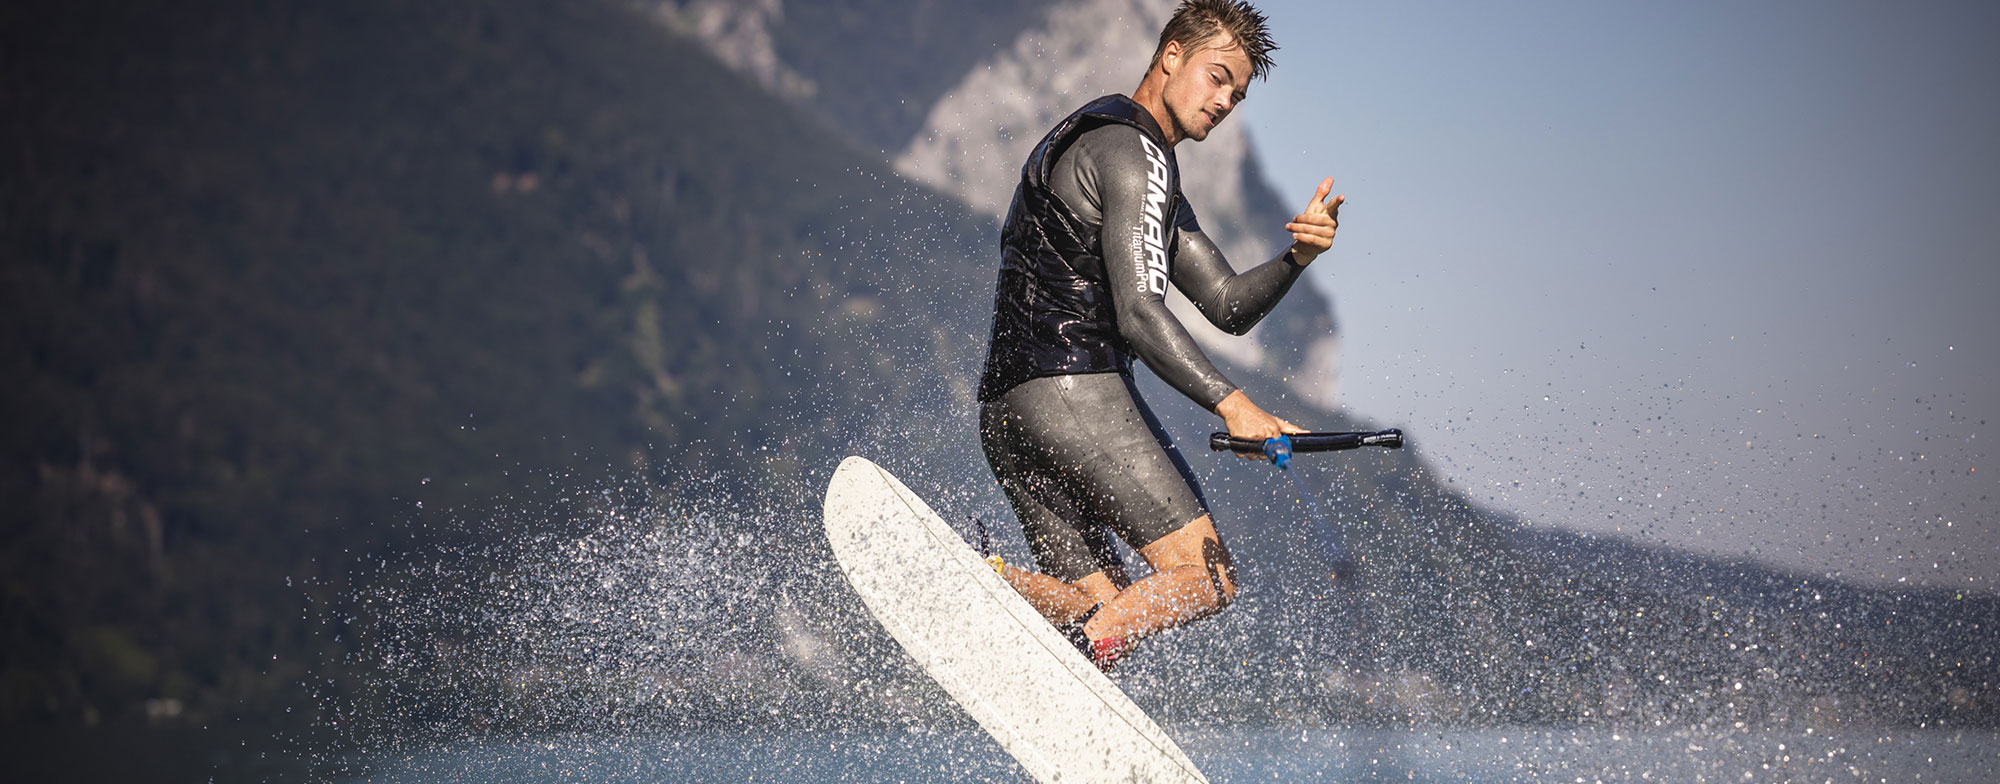 Man wears water ski wetsuits while waterskiing